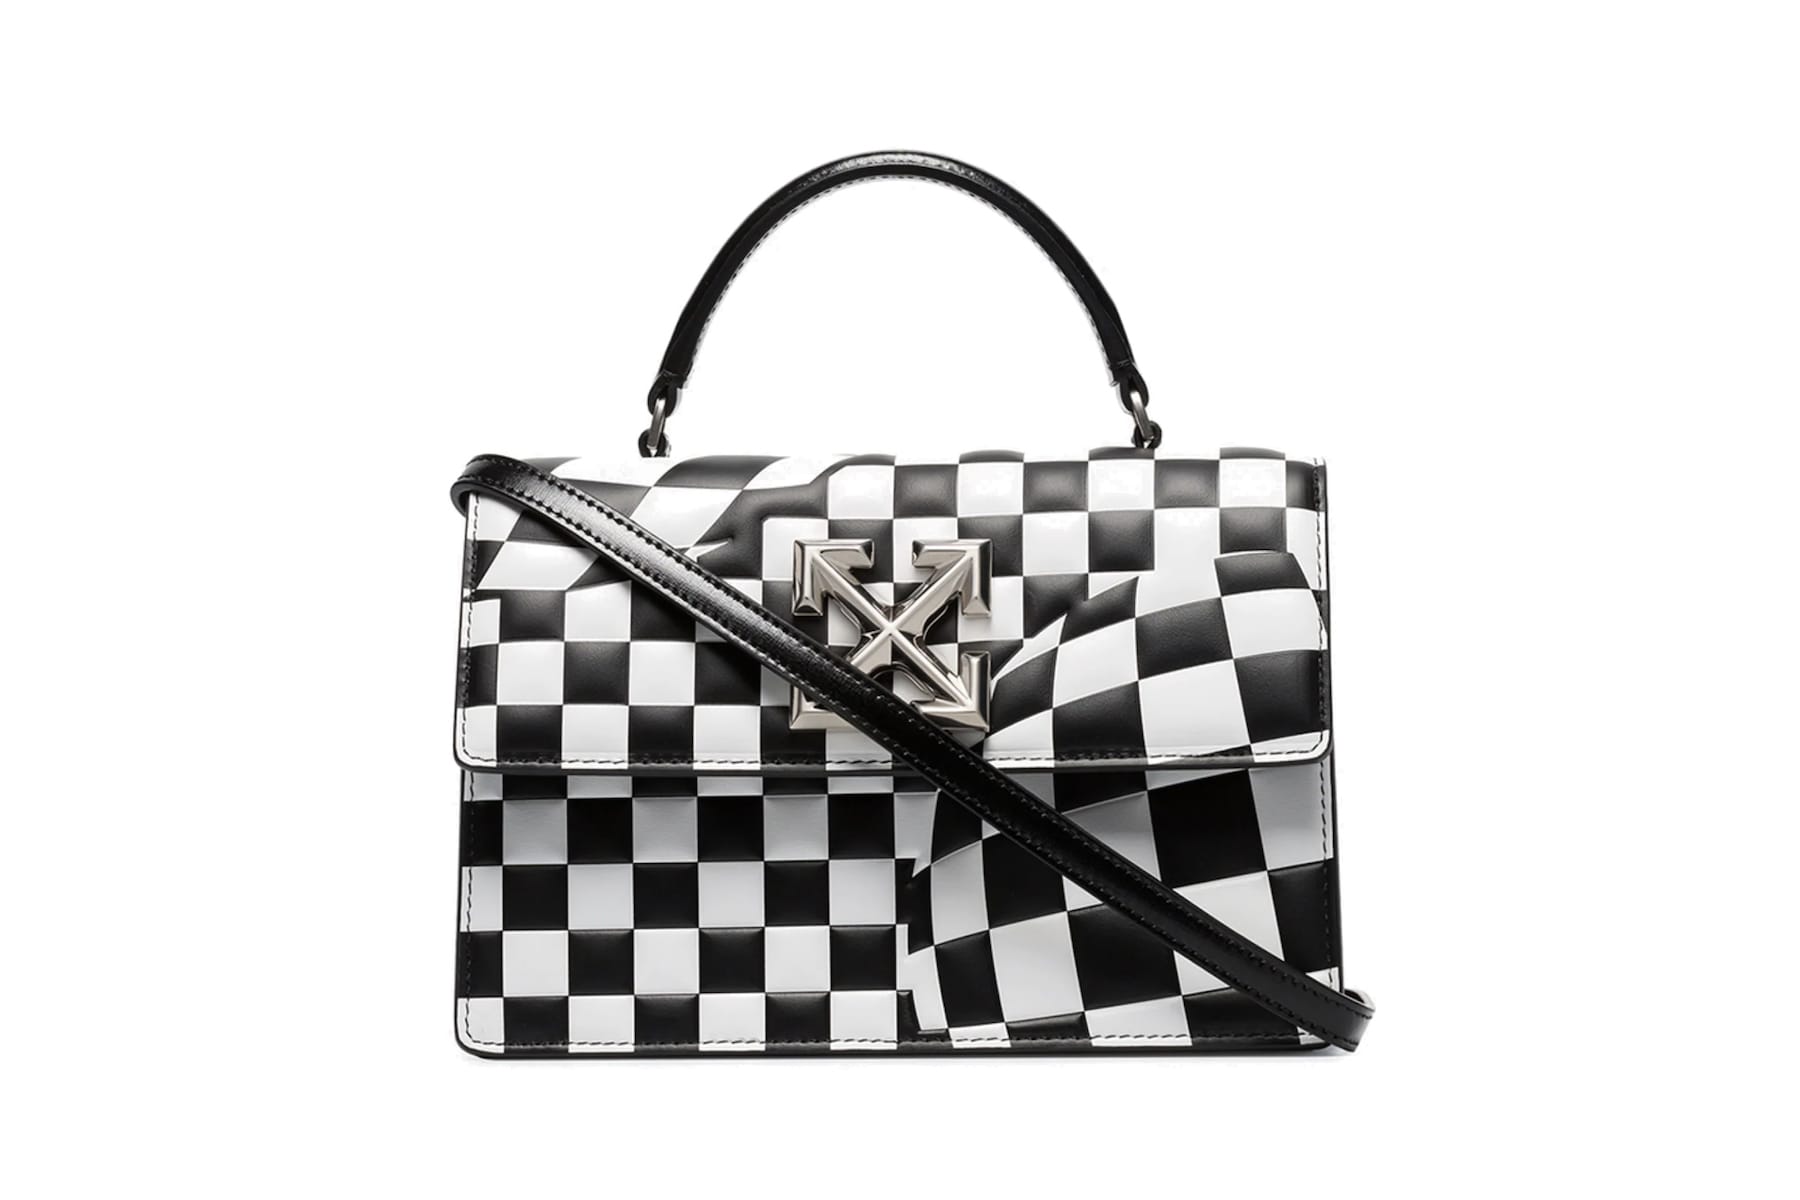 Coach Purse - Checkered black and white | Coach purses, Navy shoulder bags,  Pink handbags